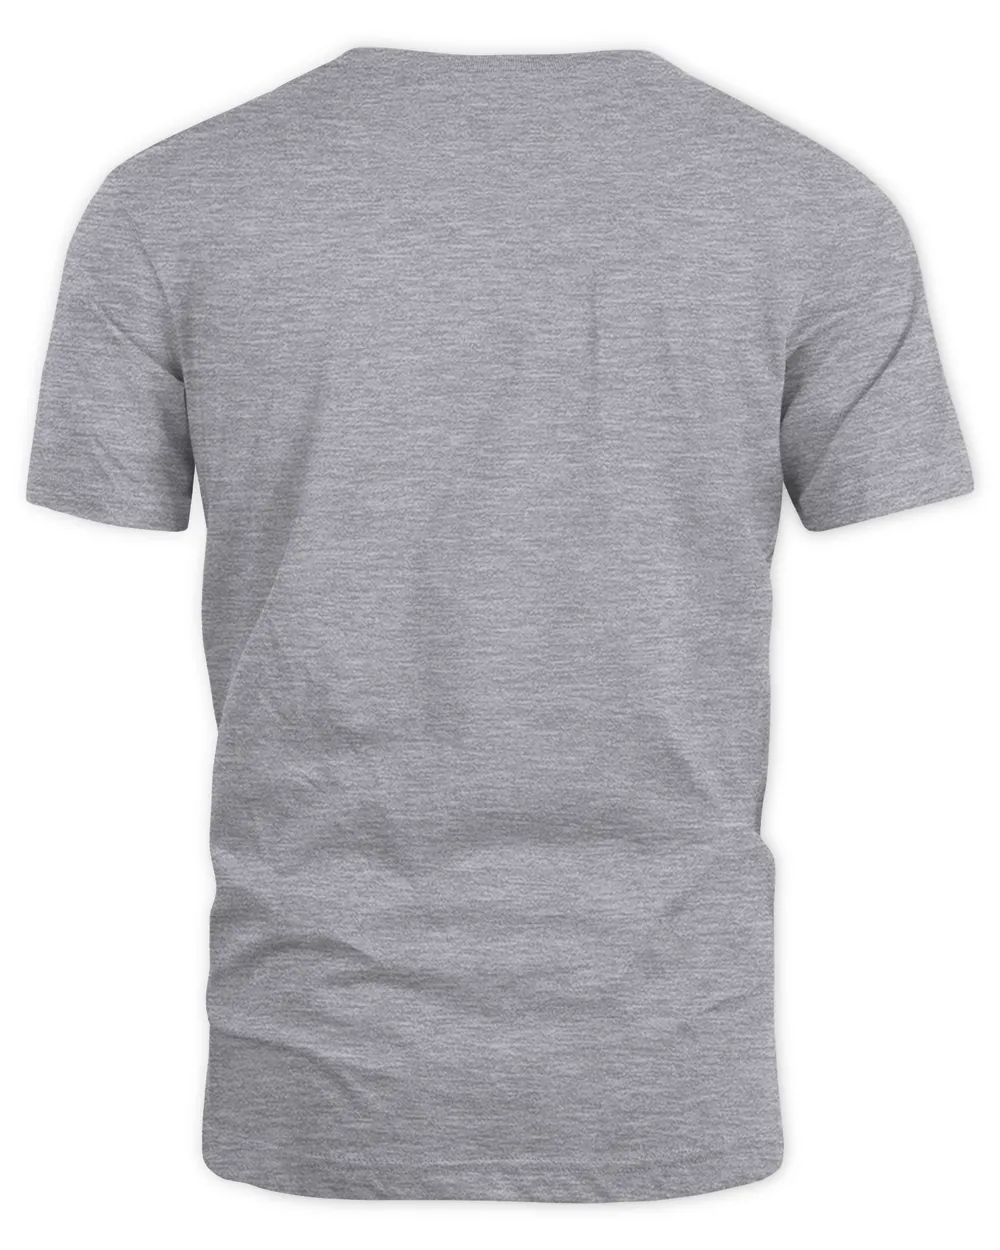 Retro Mac Miller T-Shirt Sweatshirt Hoodie Unisex